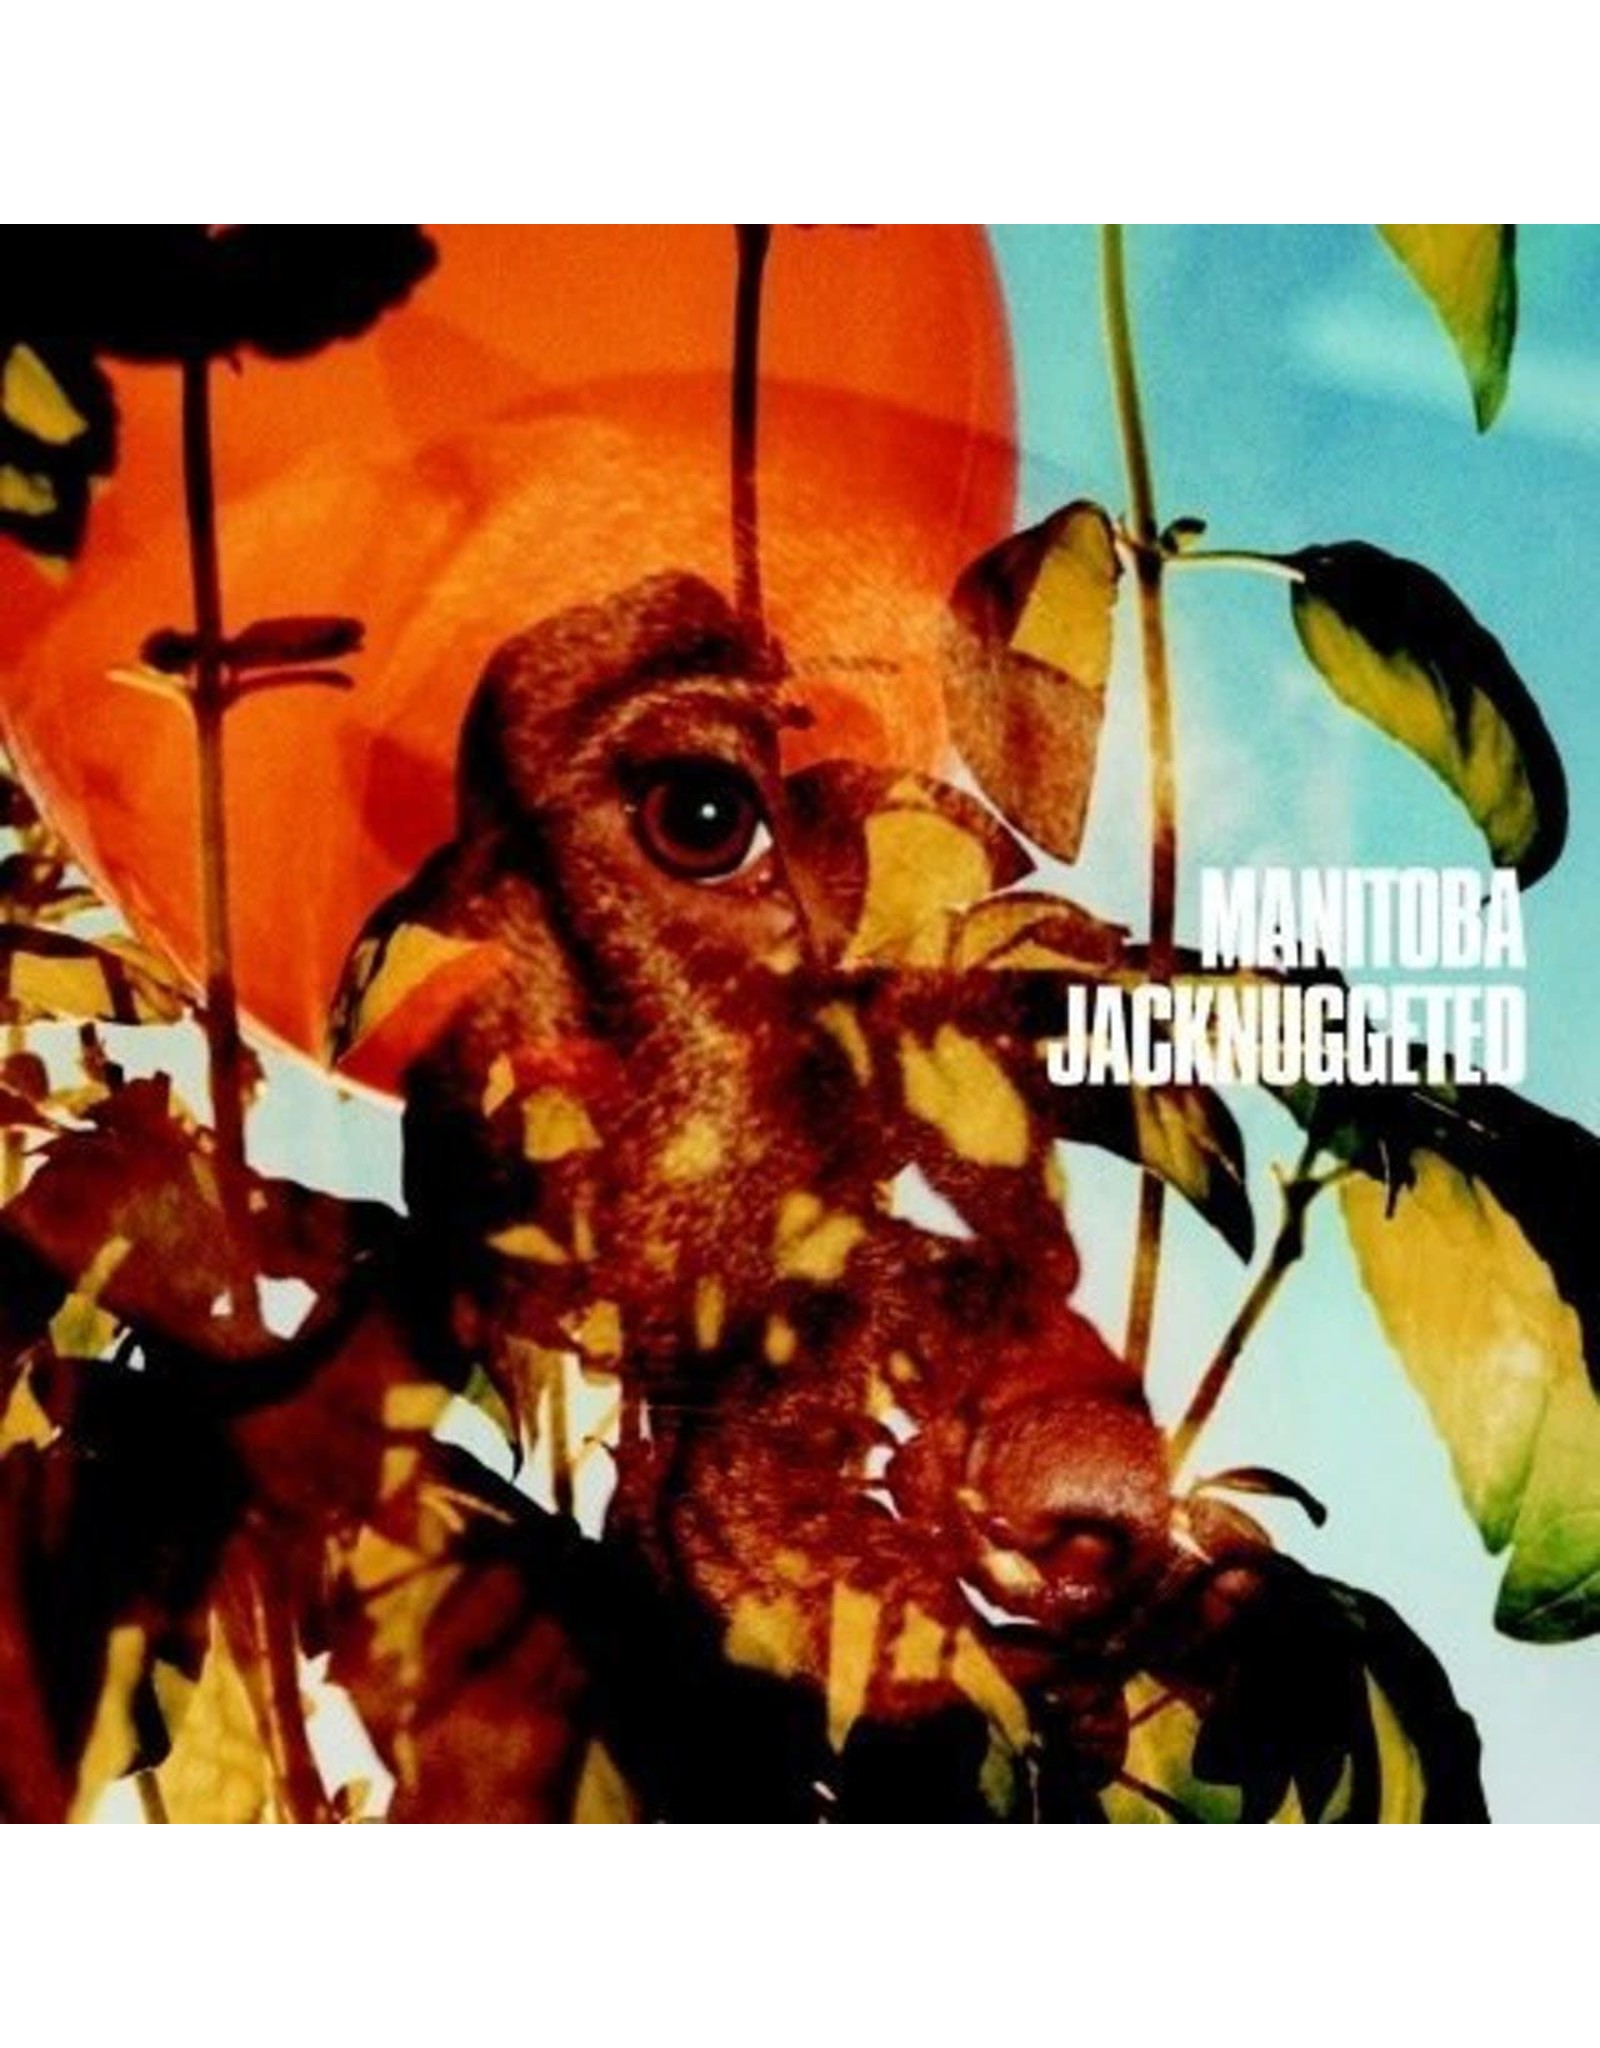 Caribou (Manitoba) - Jacknuggeted EP (12" Single)